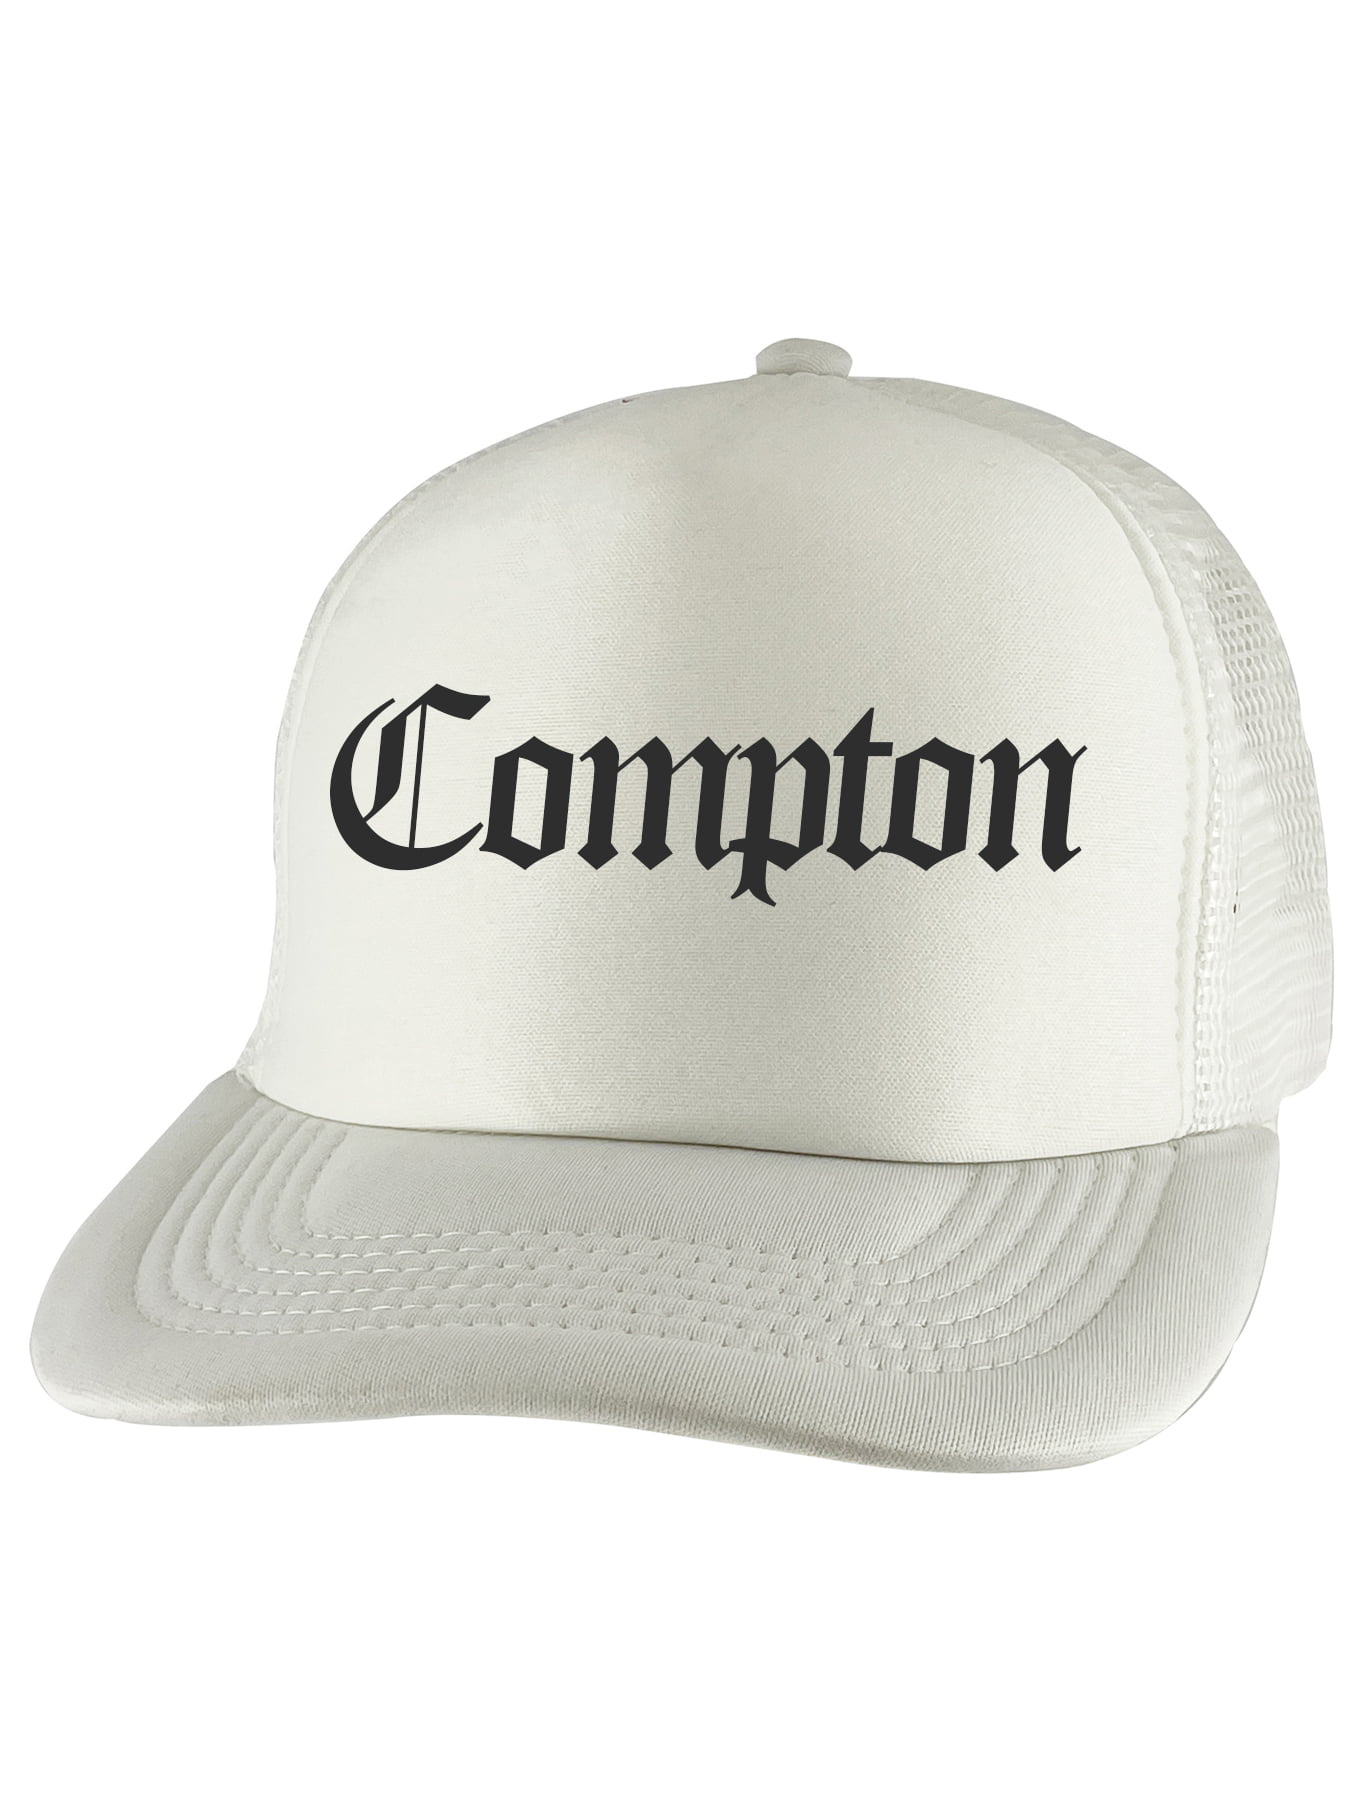 Gravity Threads Compton Old English Trucker Hat - White 